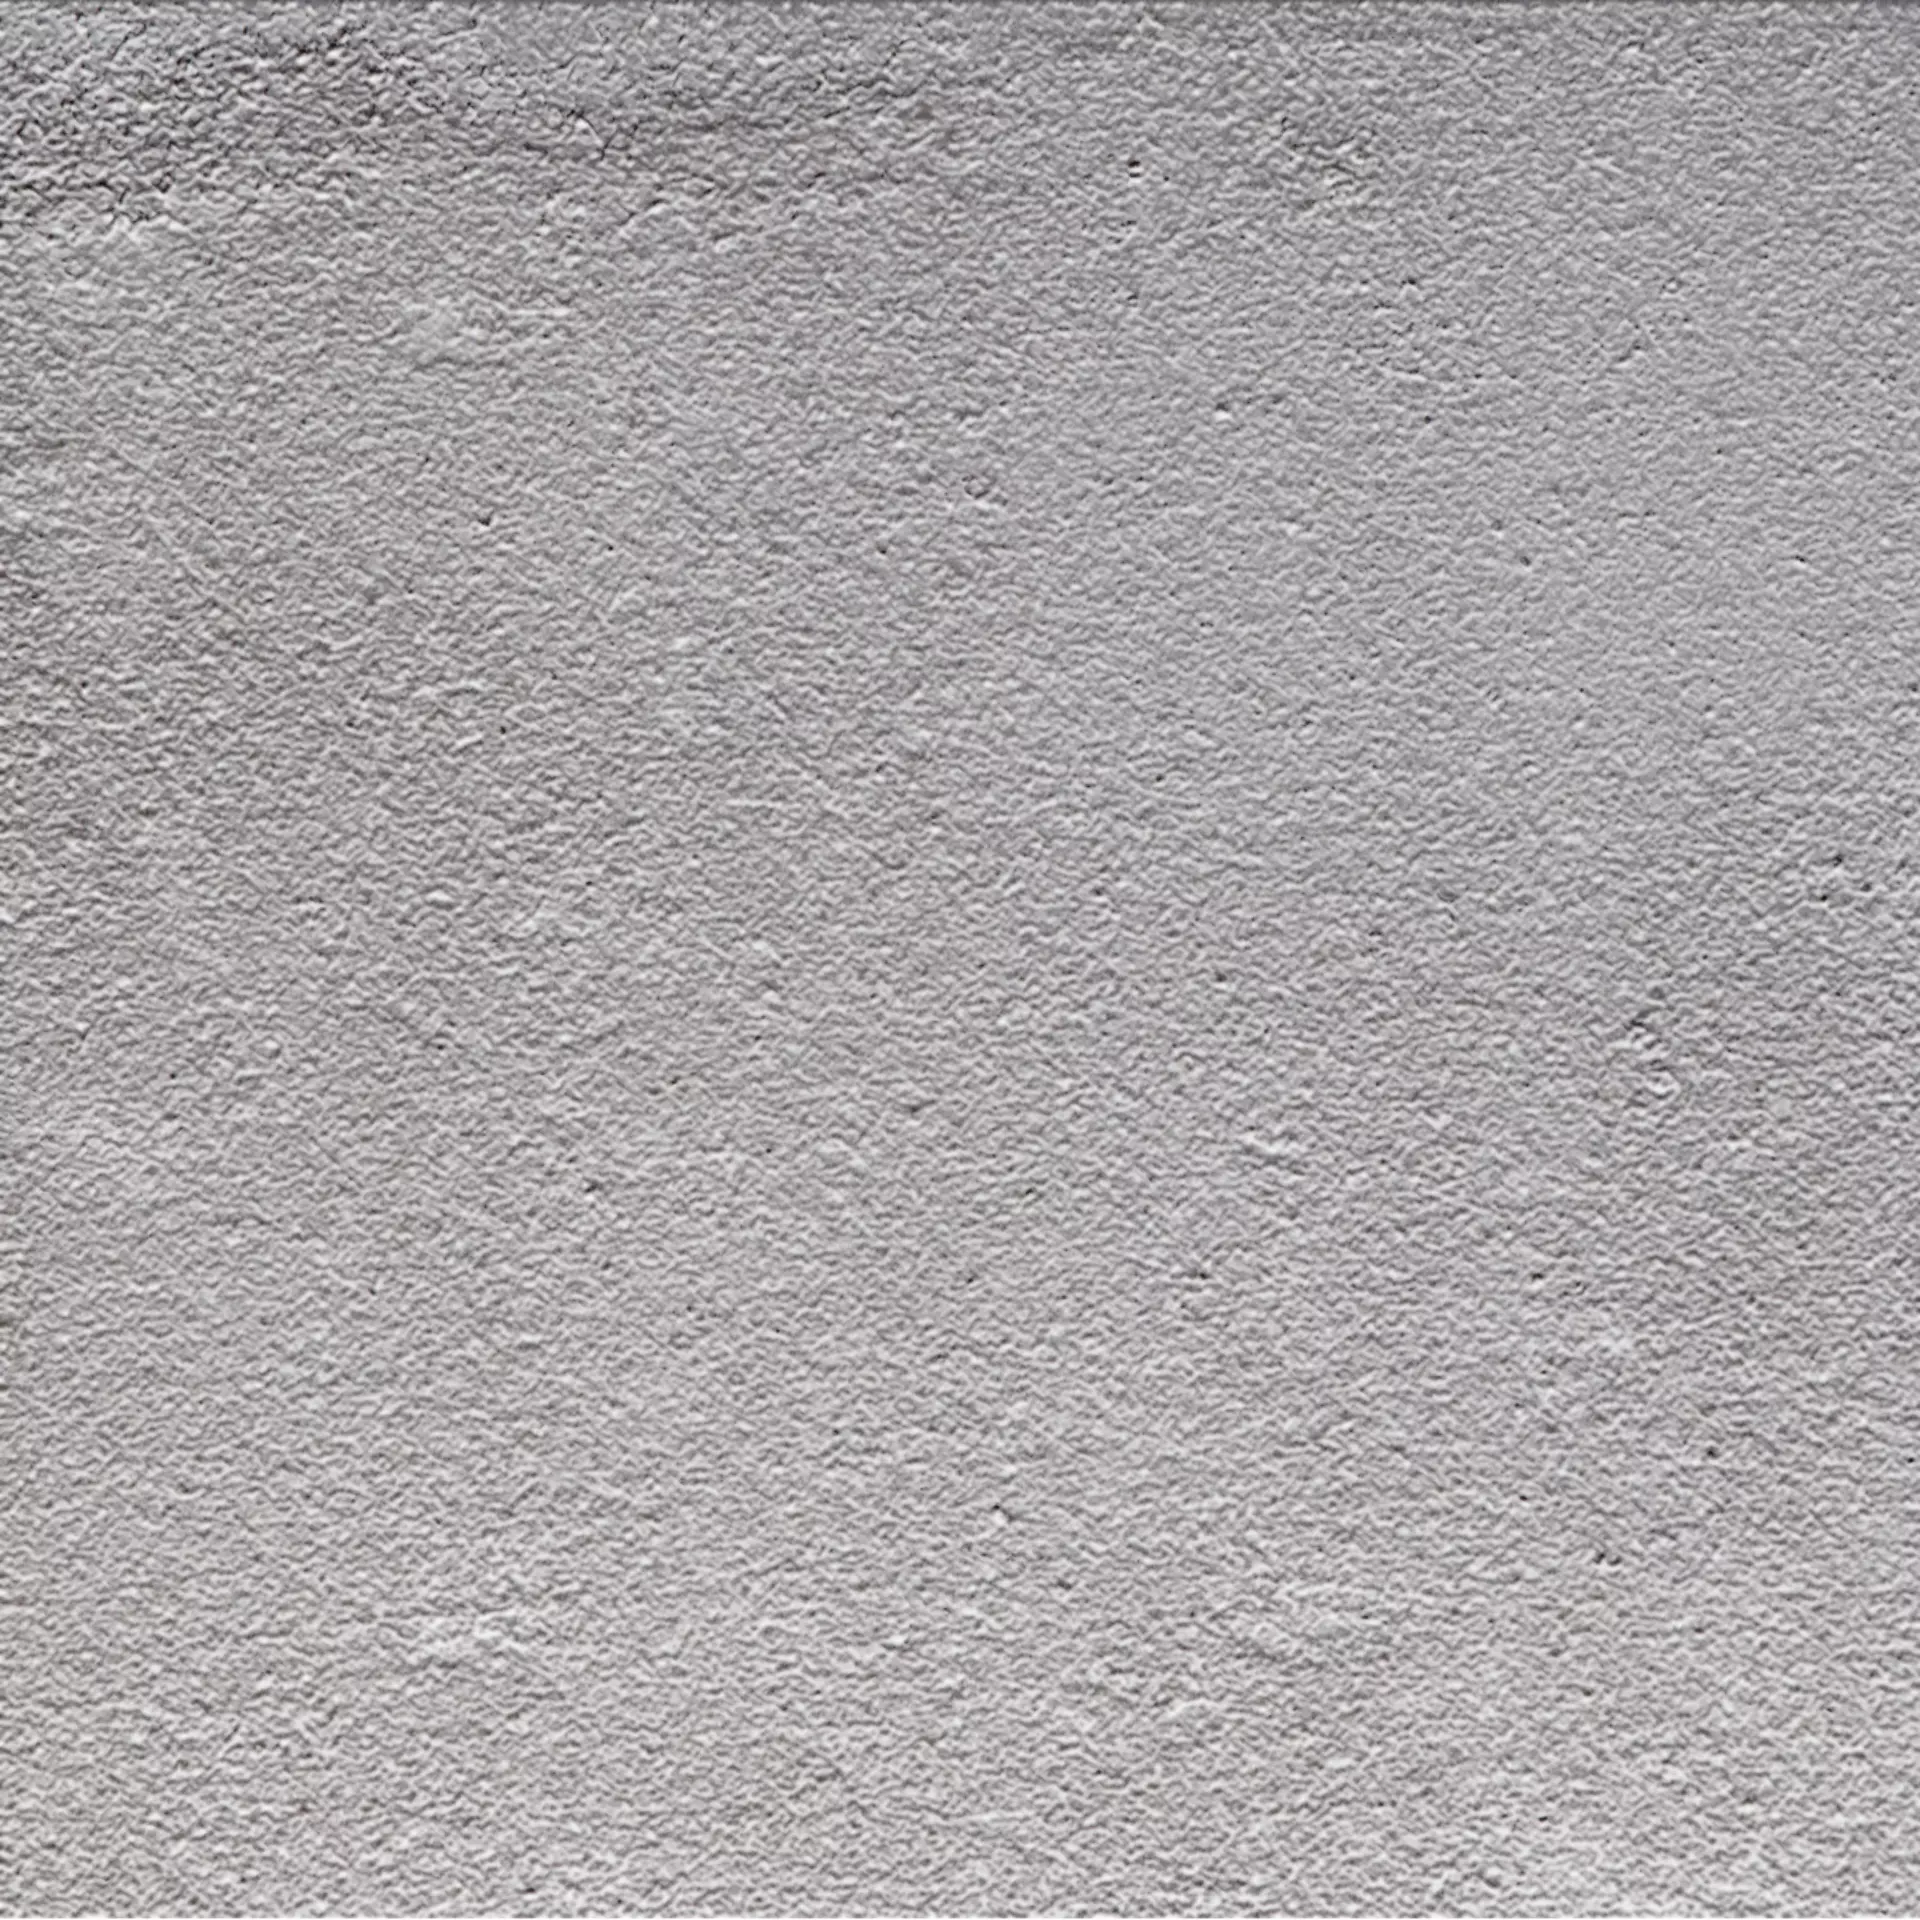 La Faenza Cottofaenza White Natural Bush-Hammered Rustic Matt Outdoor Floor 155537 60x60cm rectified 10mm - COTTOF. RB60W